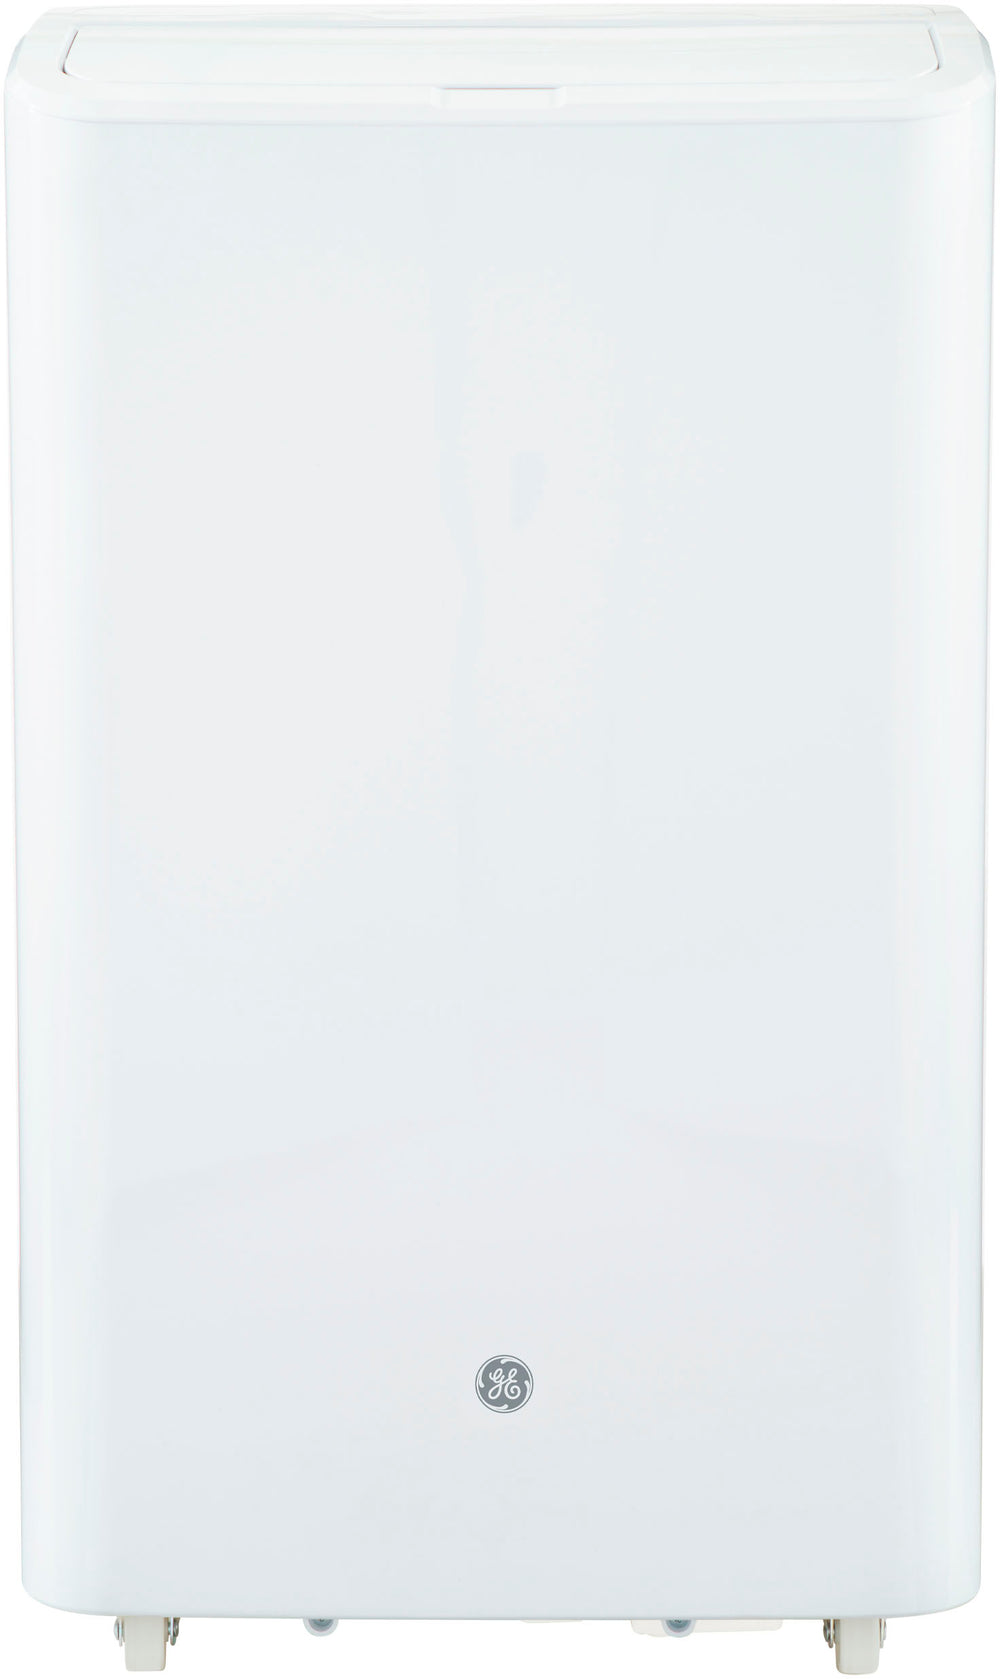 GE - 350 Sq. Ft. 8100 BTU Smart Portable Air Conditioner - White_1